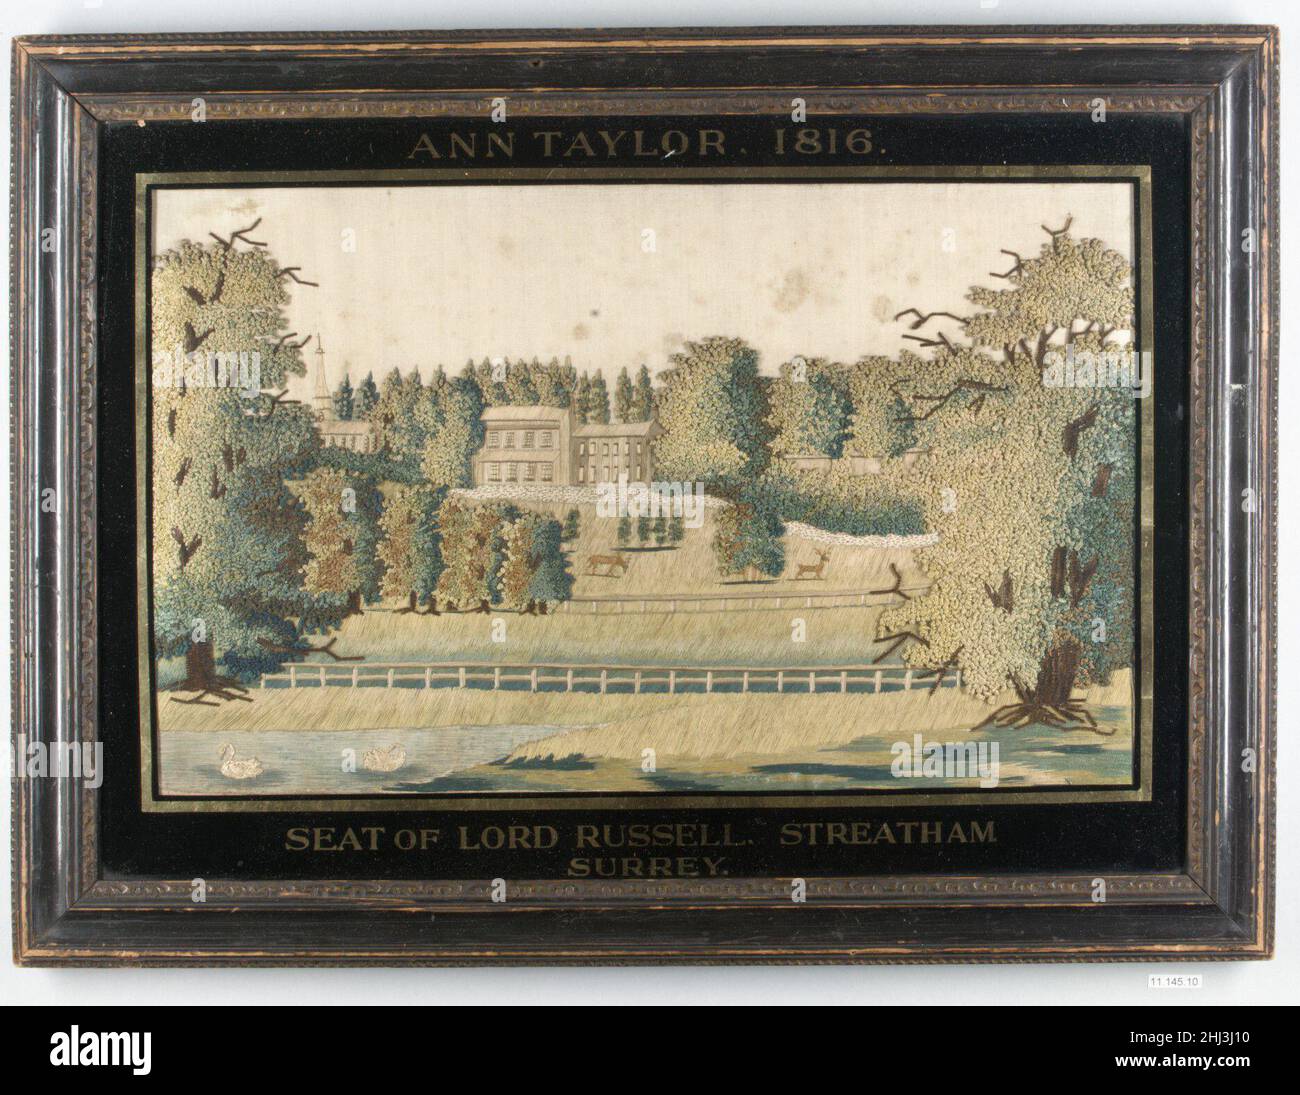 Sede di Lord Russell, Streatham, Surrey ca. 1816 britannico. Sede di Lord Russell, Streatham, Surrey 219365 Foto Stock